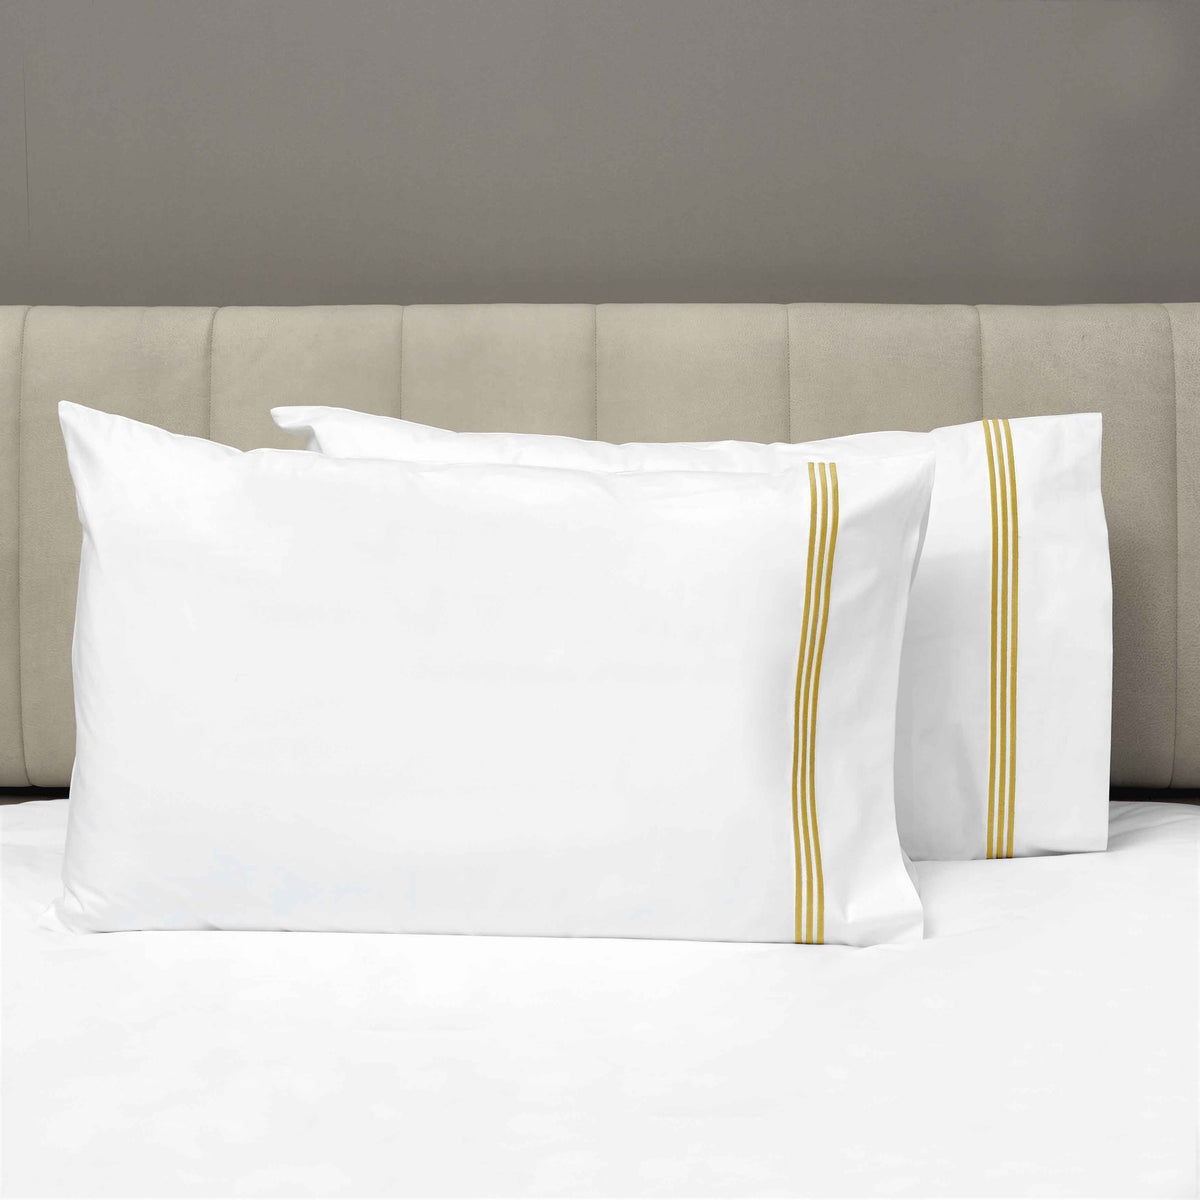 Pair of Pillowcases of Signoria Platinum Percale Bedding in White/Gold Color